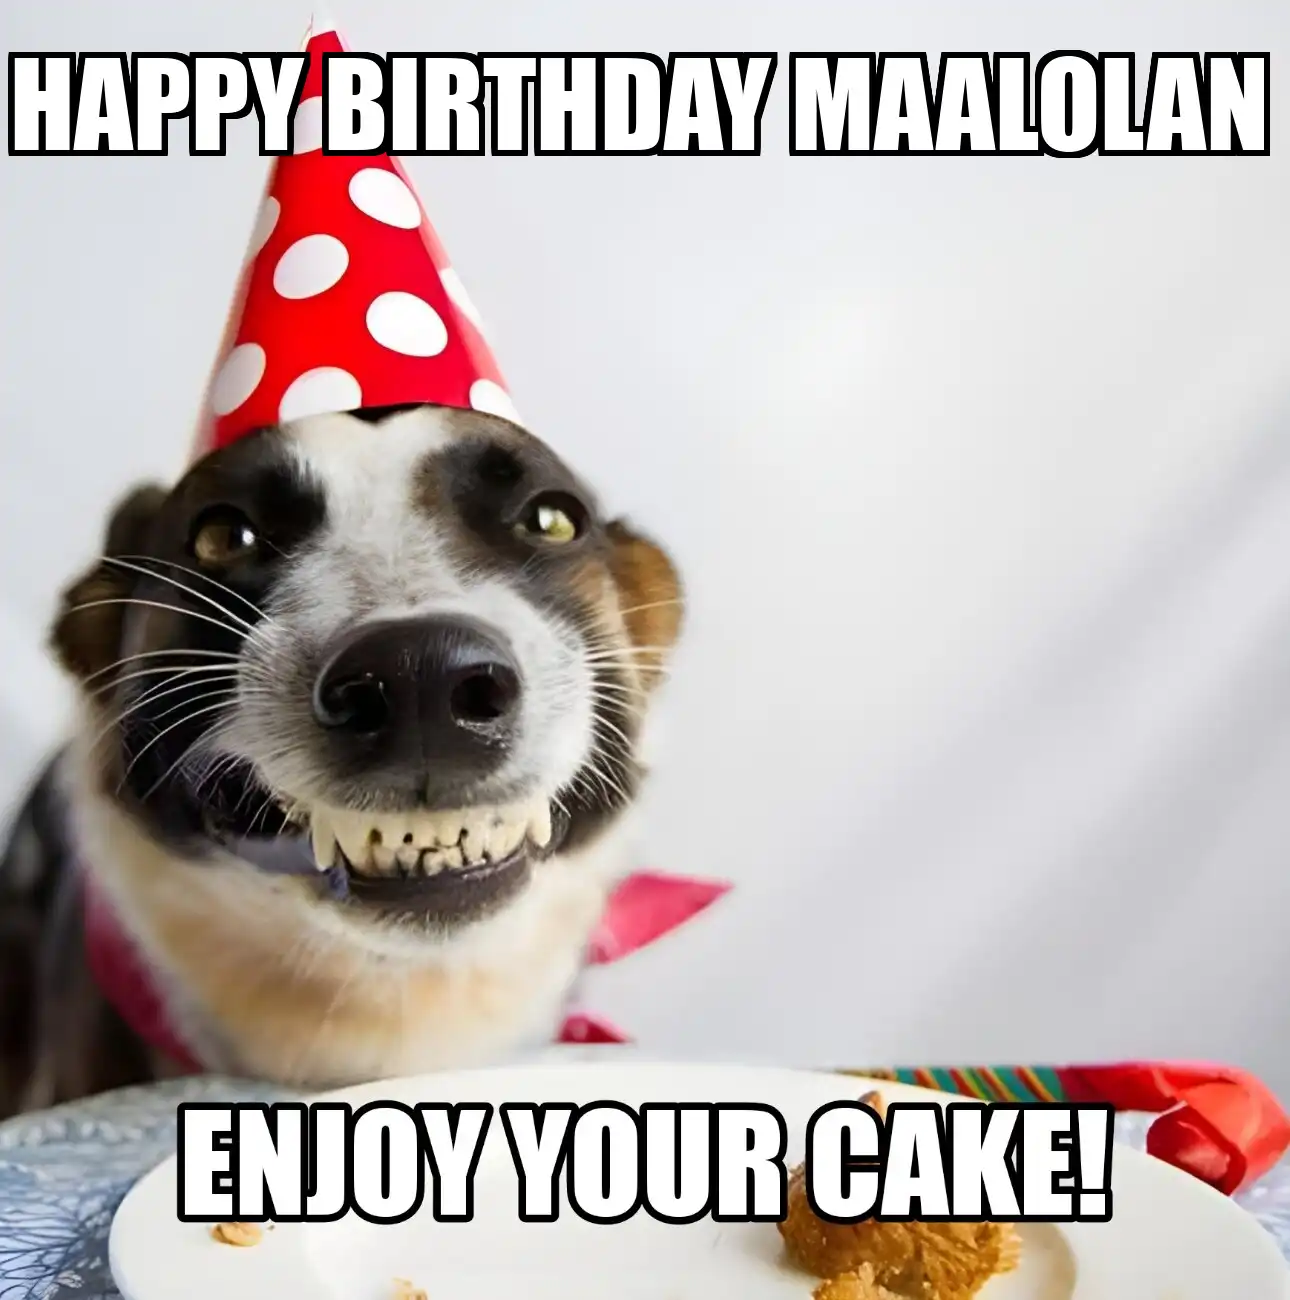 Happy Birthday Maalolan Enjoy Your Cake Dog Meme